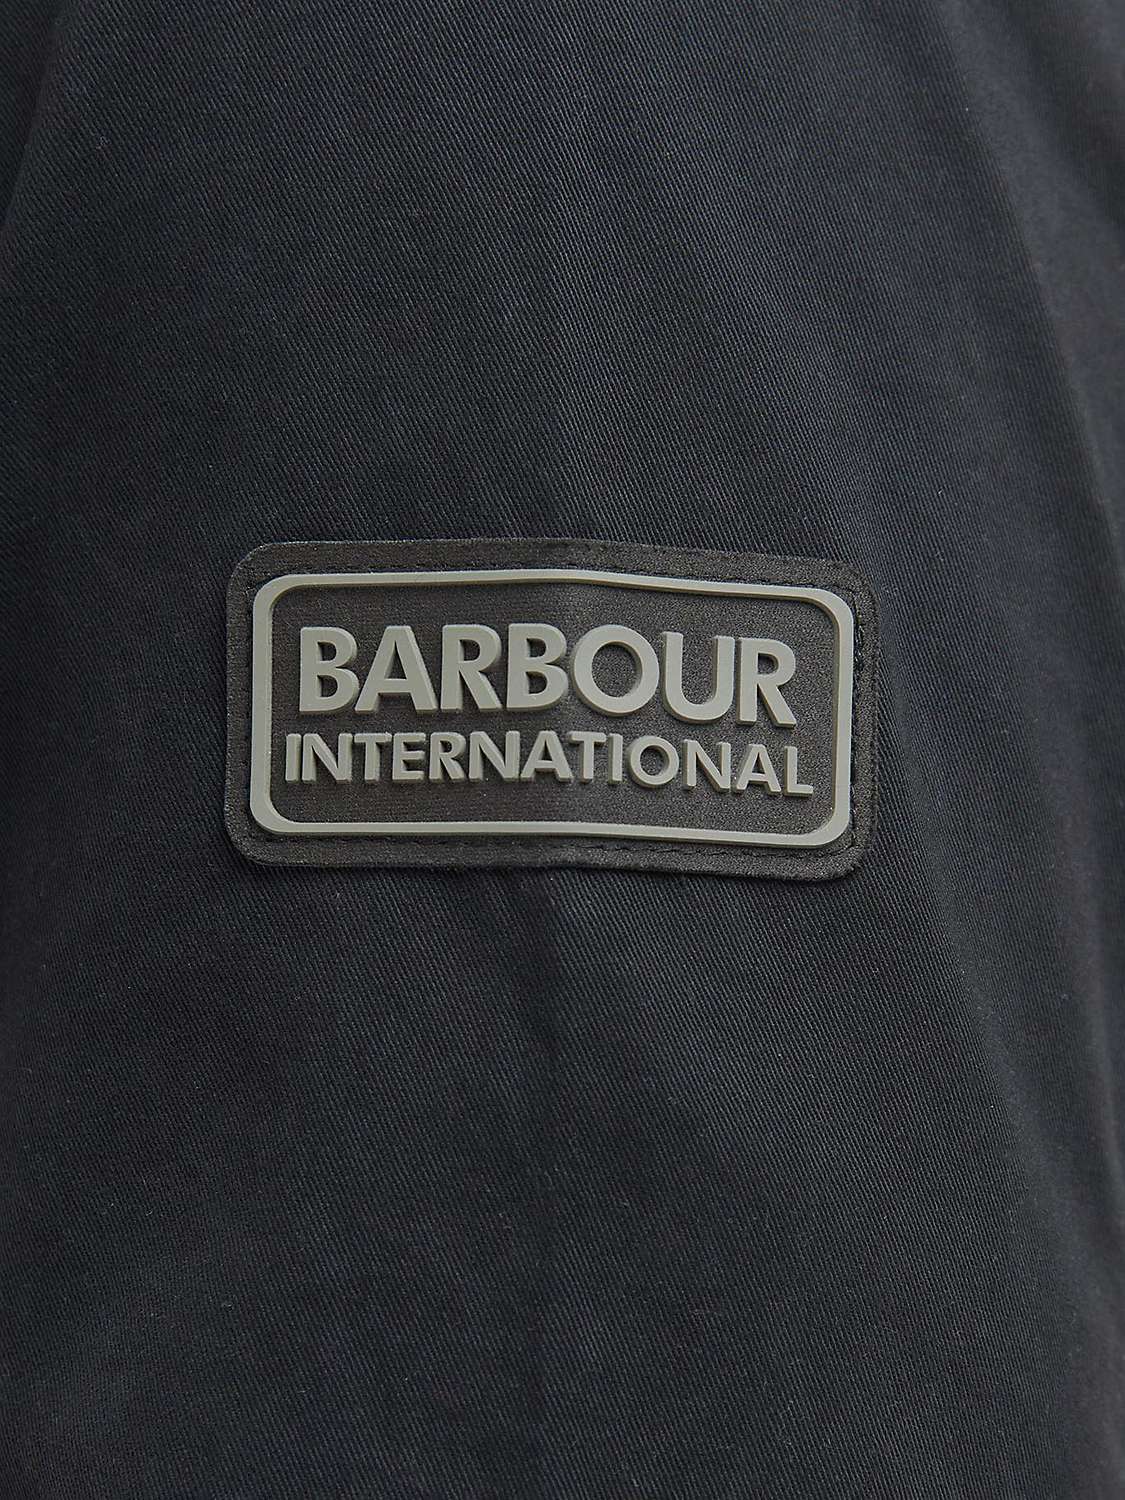 Buy Barbour International Adey Cotton Overshirt Online at johnlewis.com